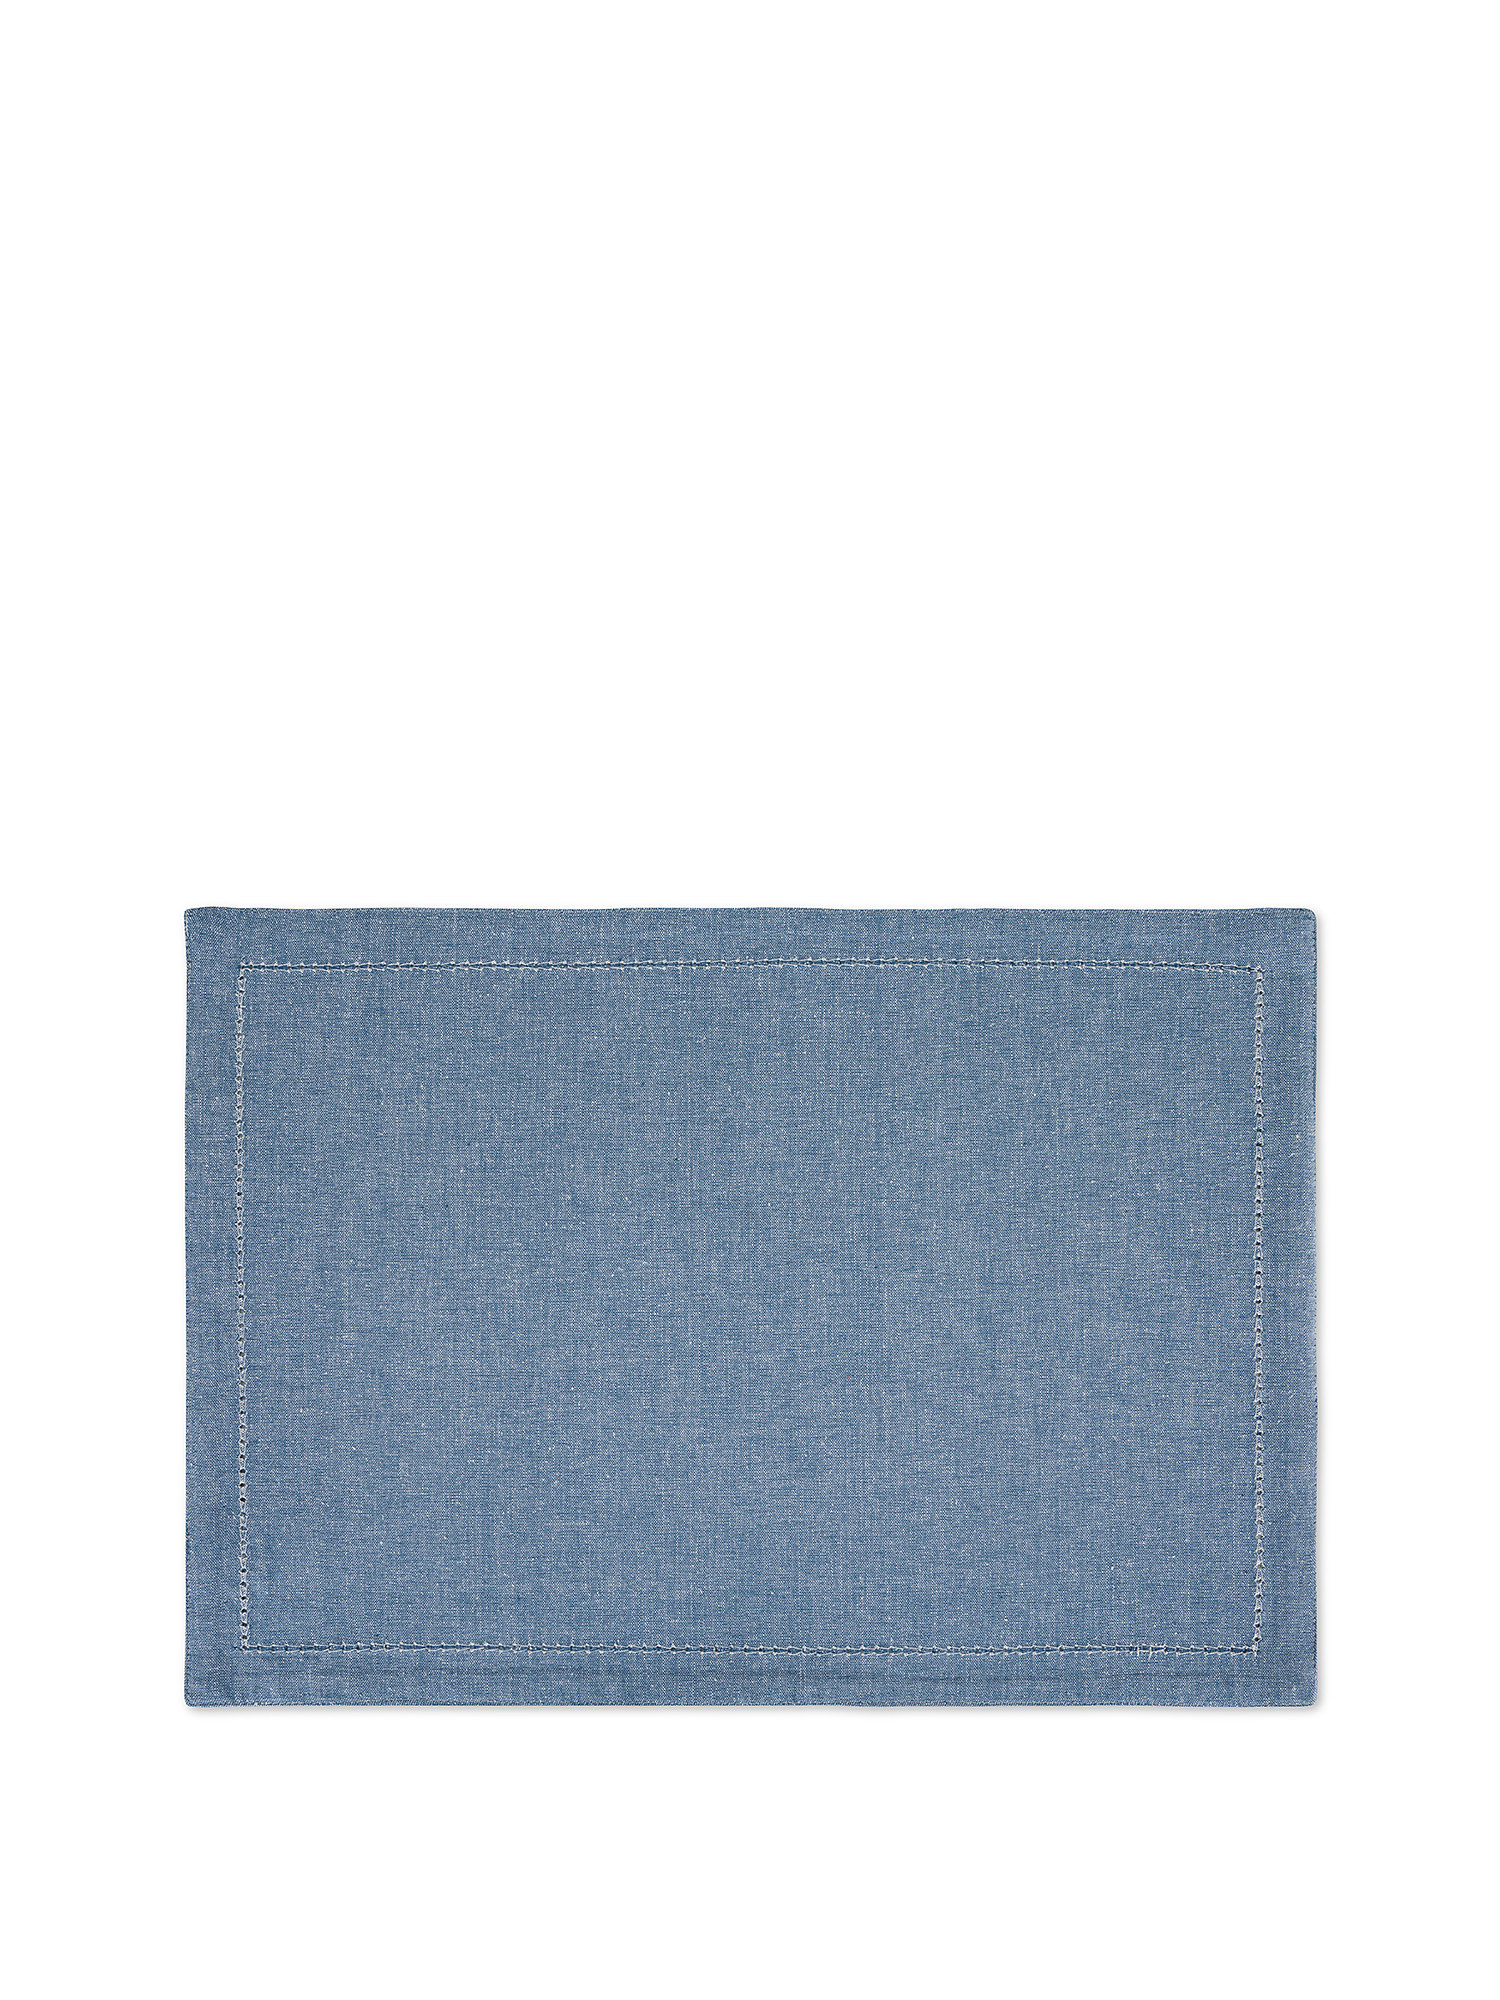 Chambre cotton placemat with a-jour hem, Blue, large image number 0